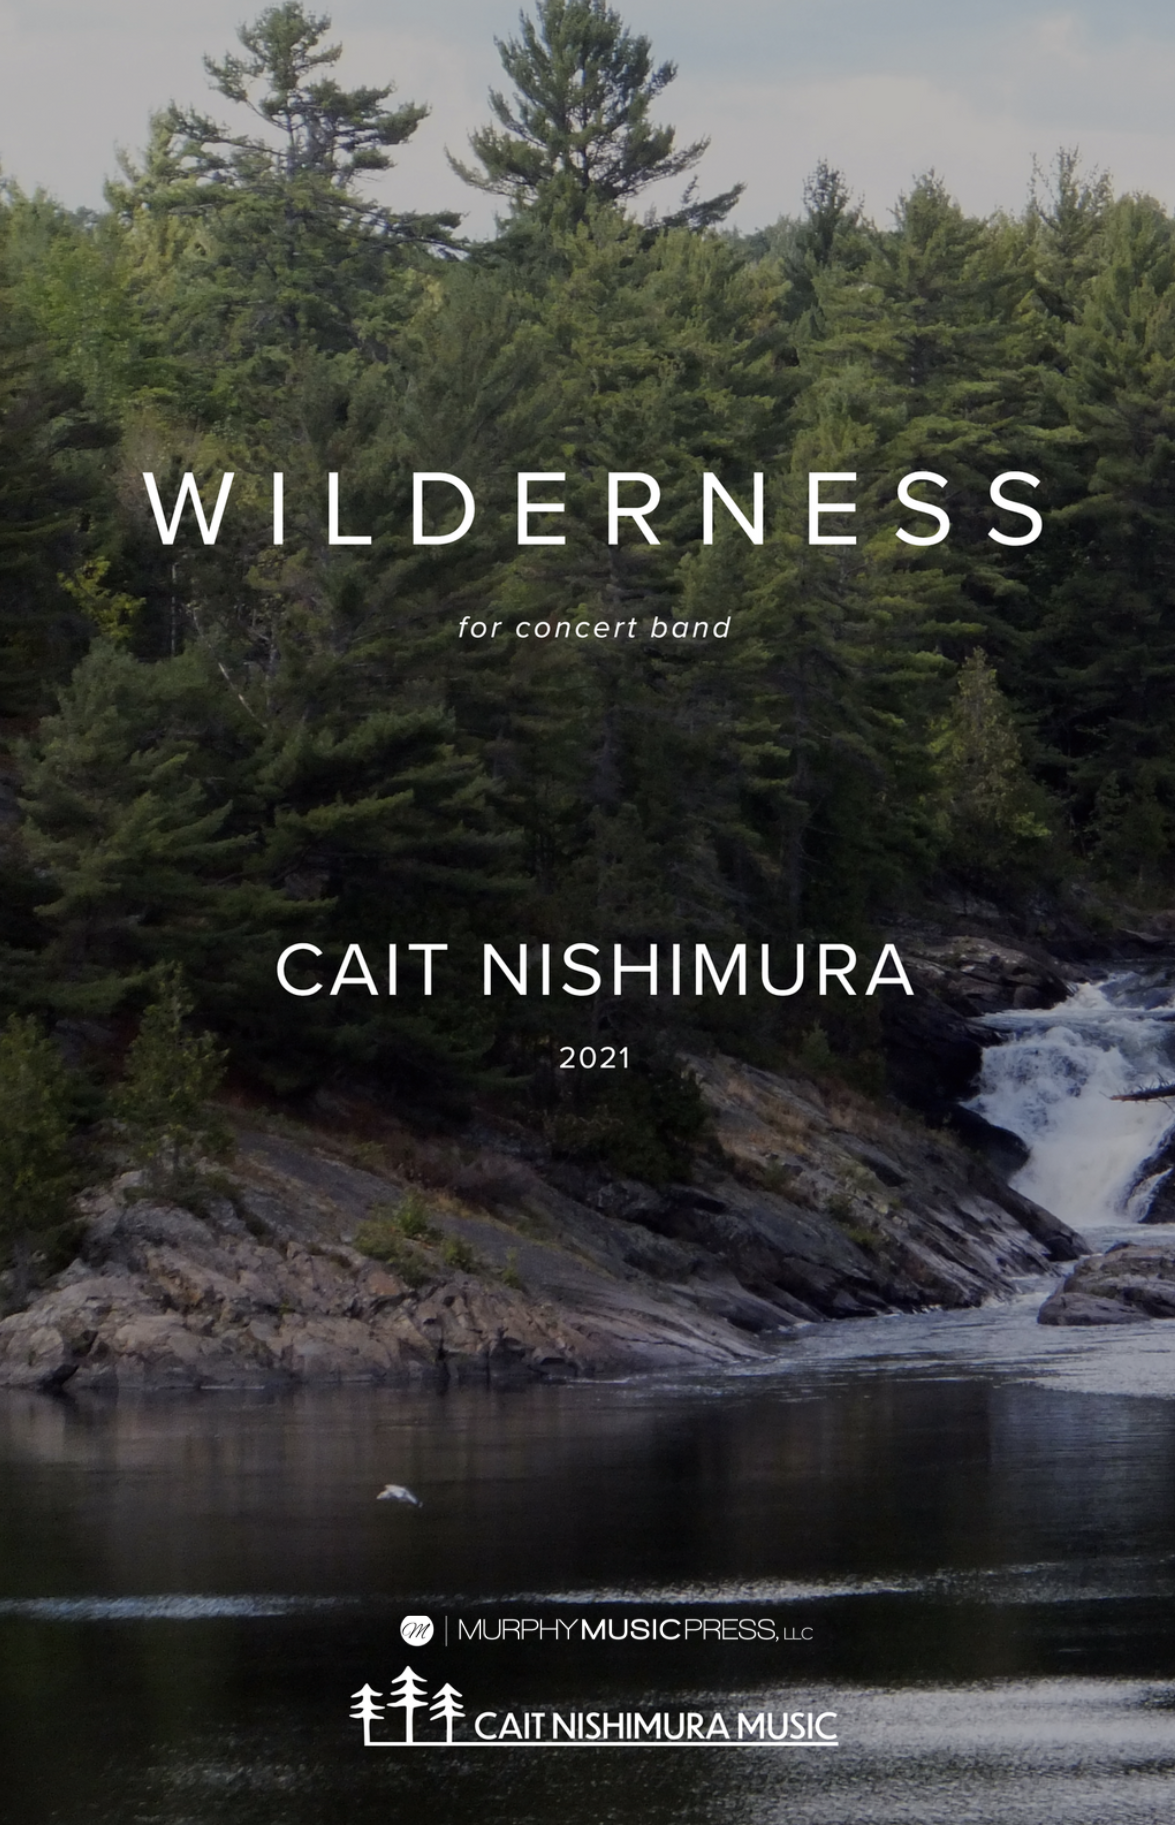 Wilderness  by Cait Nishimura